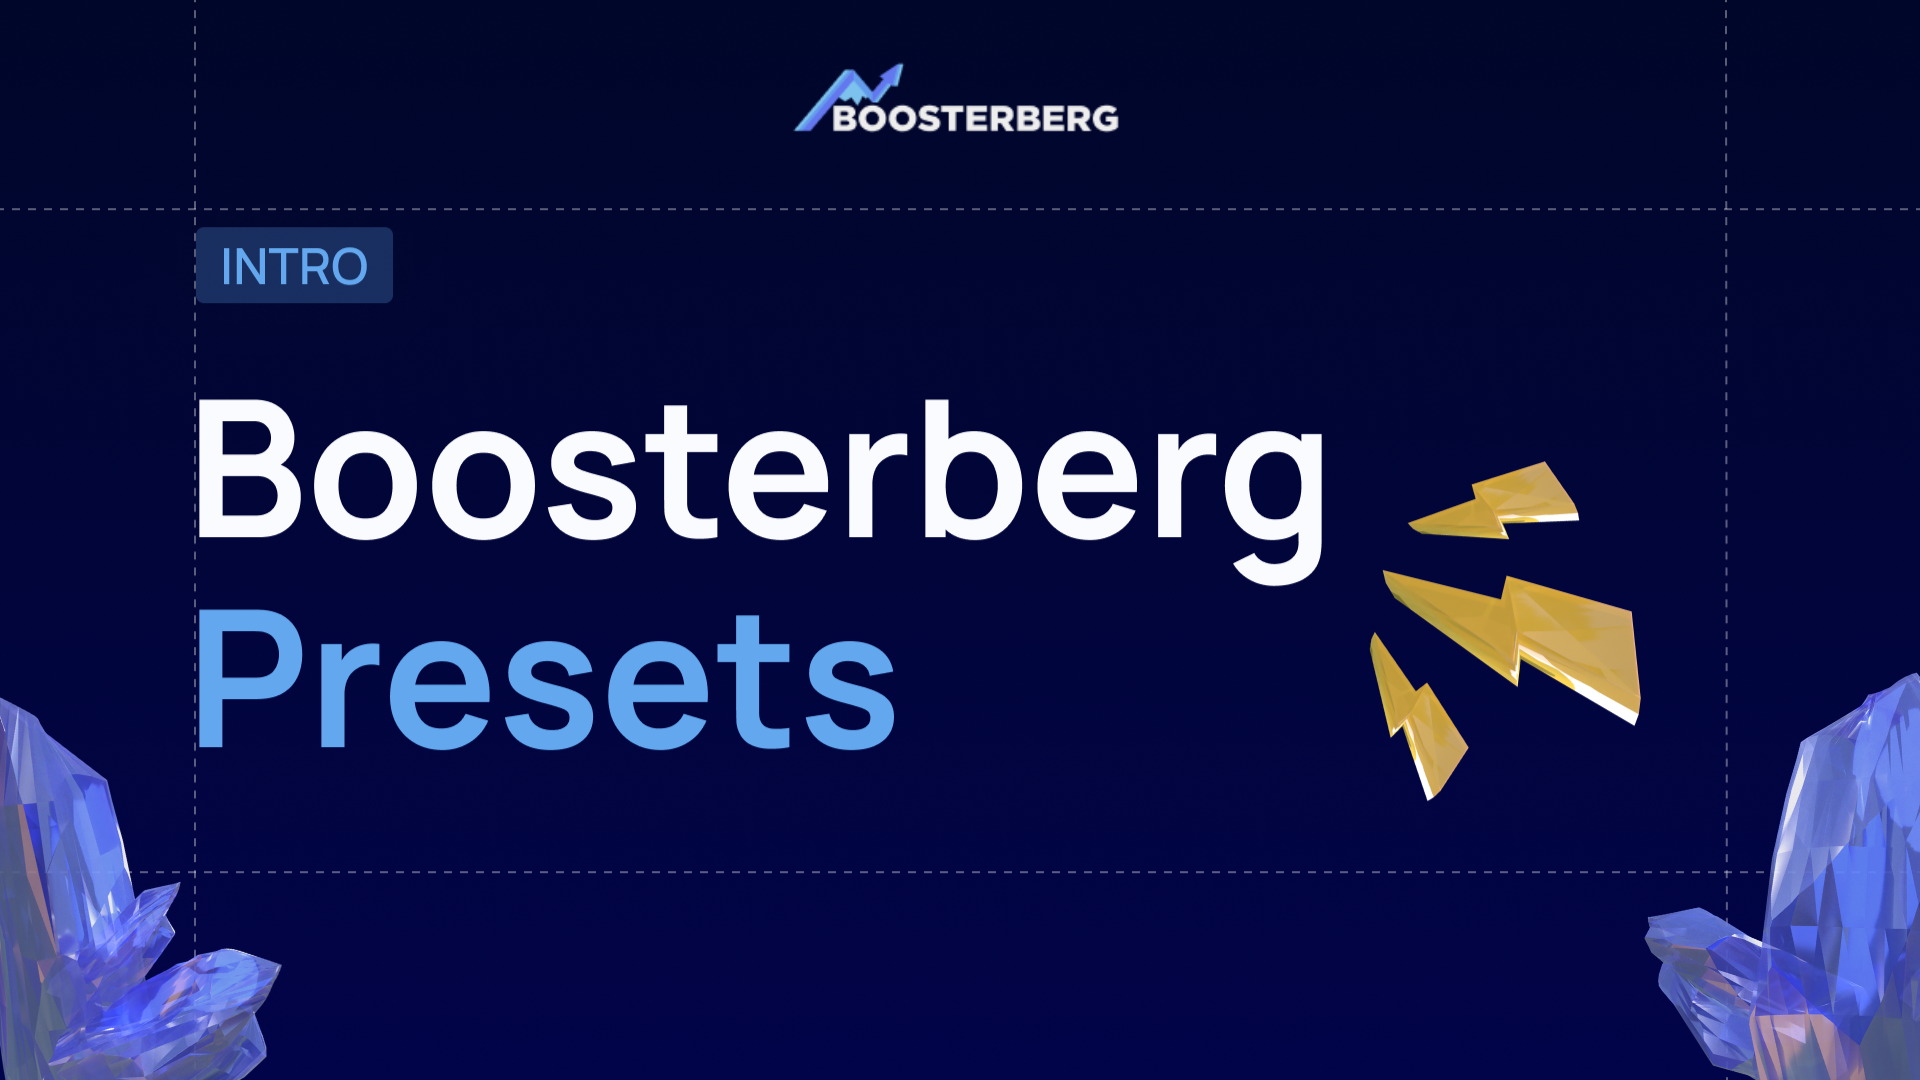 New Boosterberg Feature for Content Creators: Ad Presets